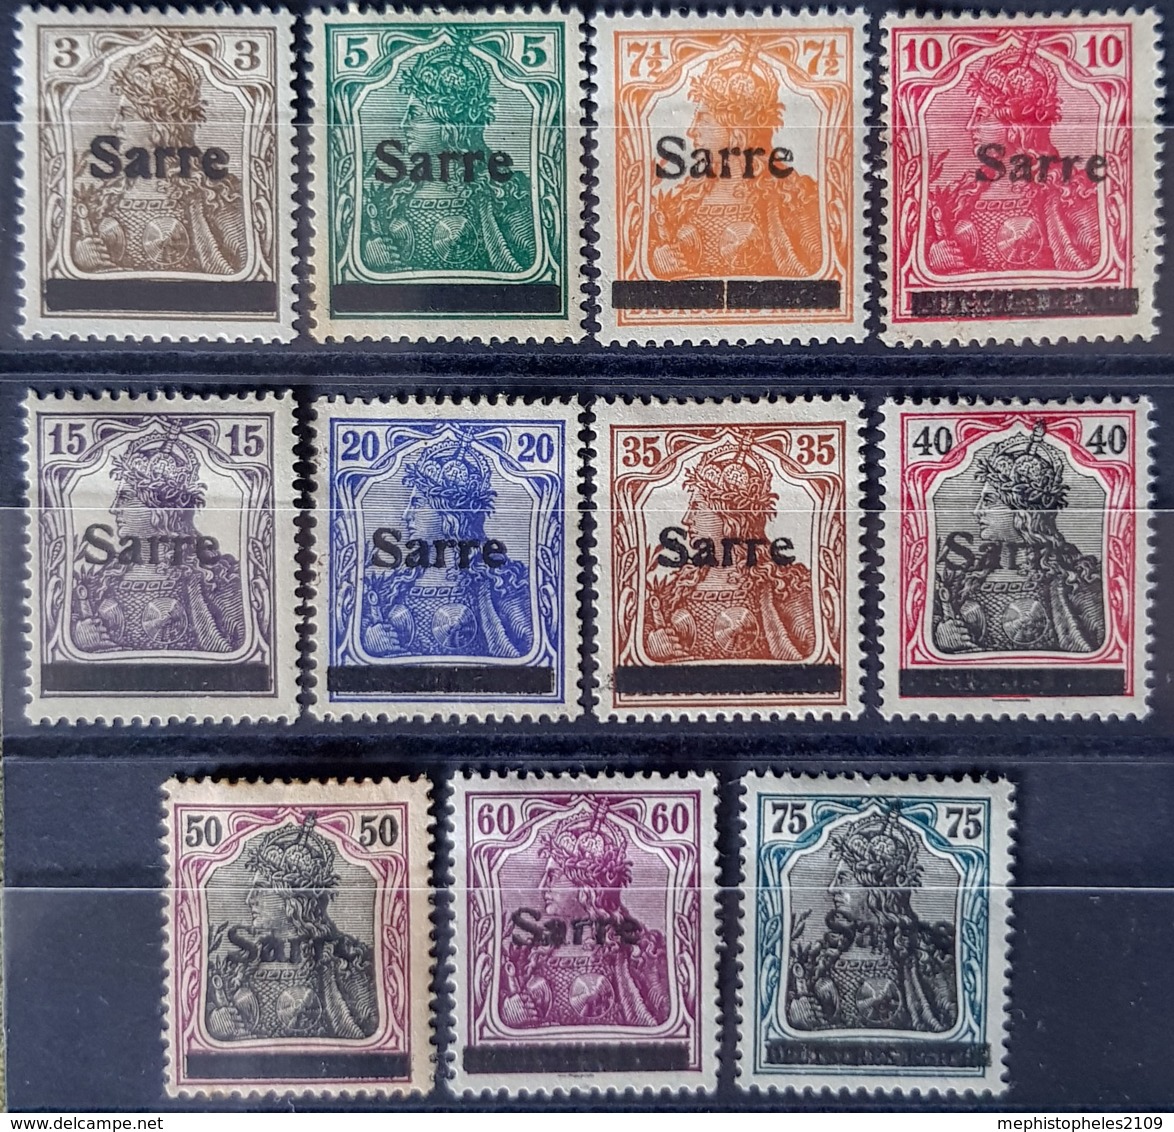 SARRE / SAARGEBIET 1920 - MLH - Mi 3, 4, 5, 6, 7, 8, 11, 12, 13, 14, 15 - Unused Stamps